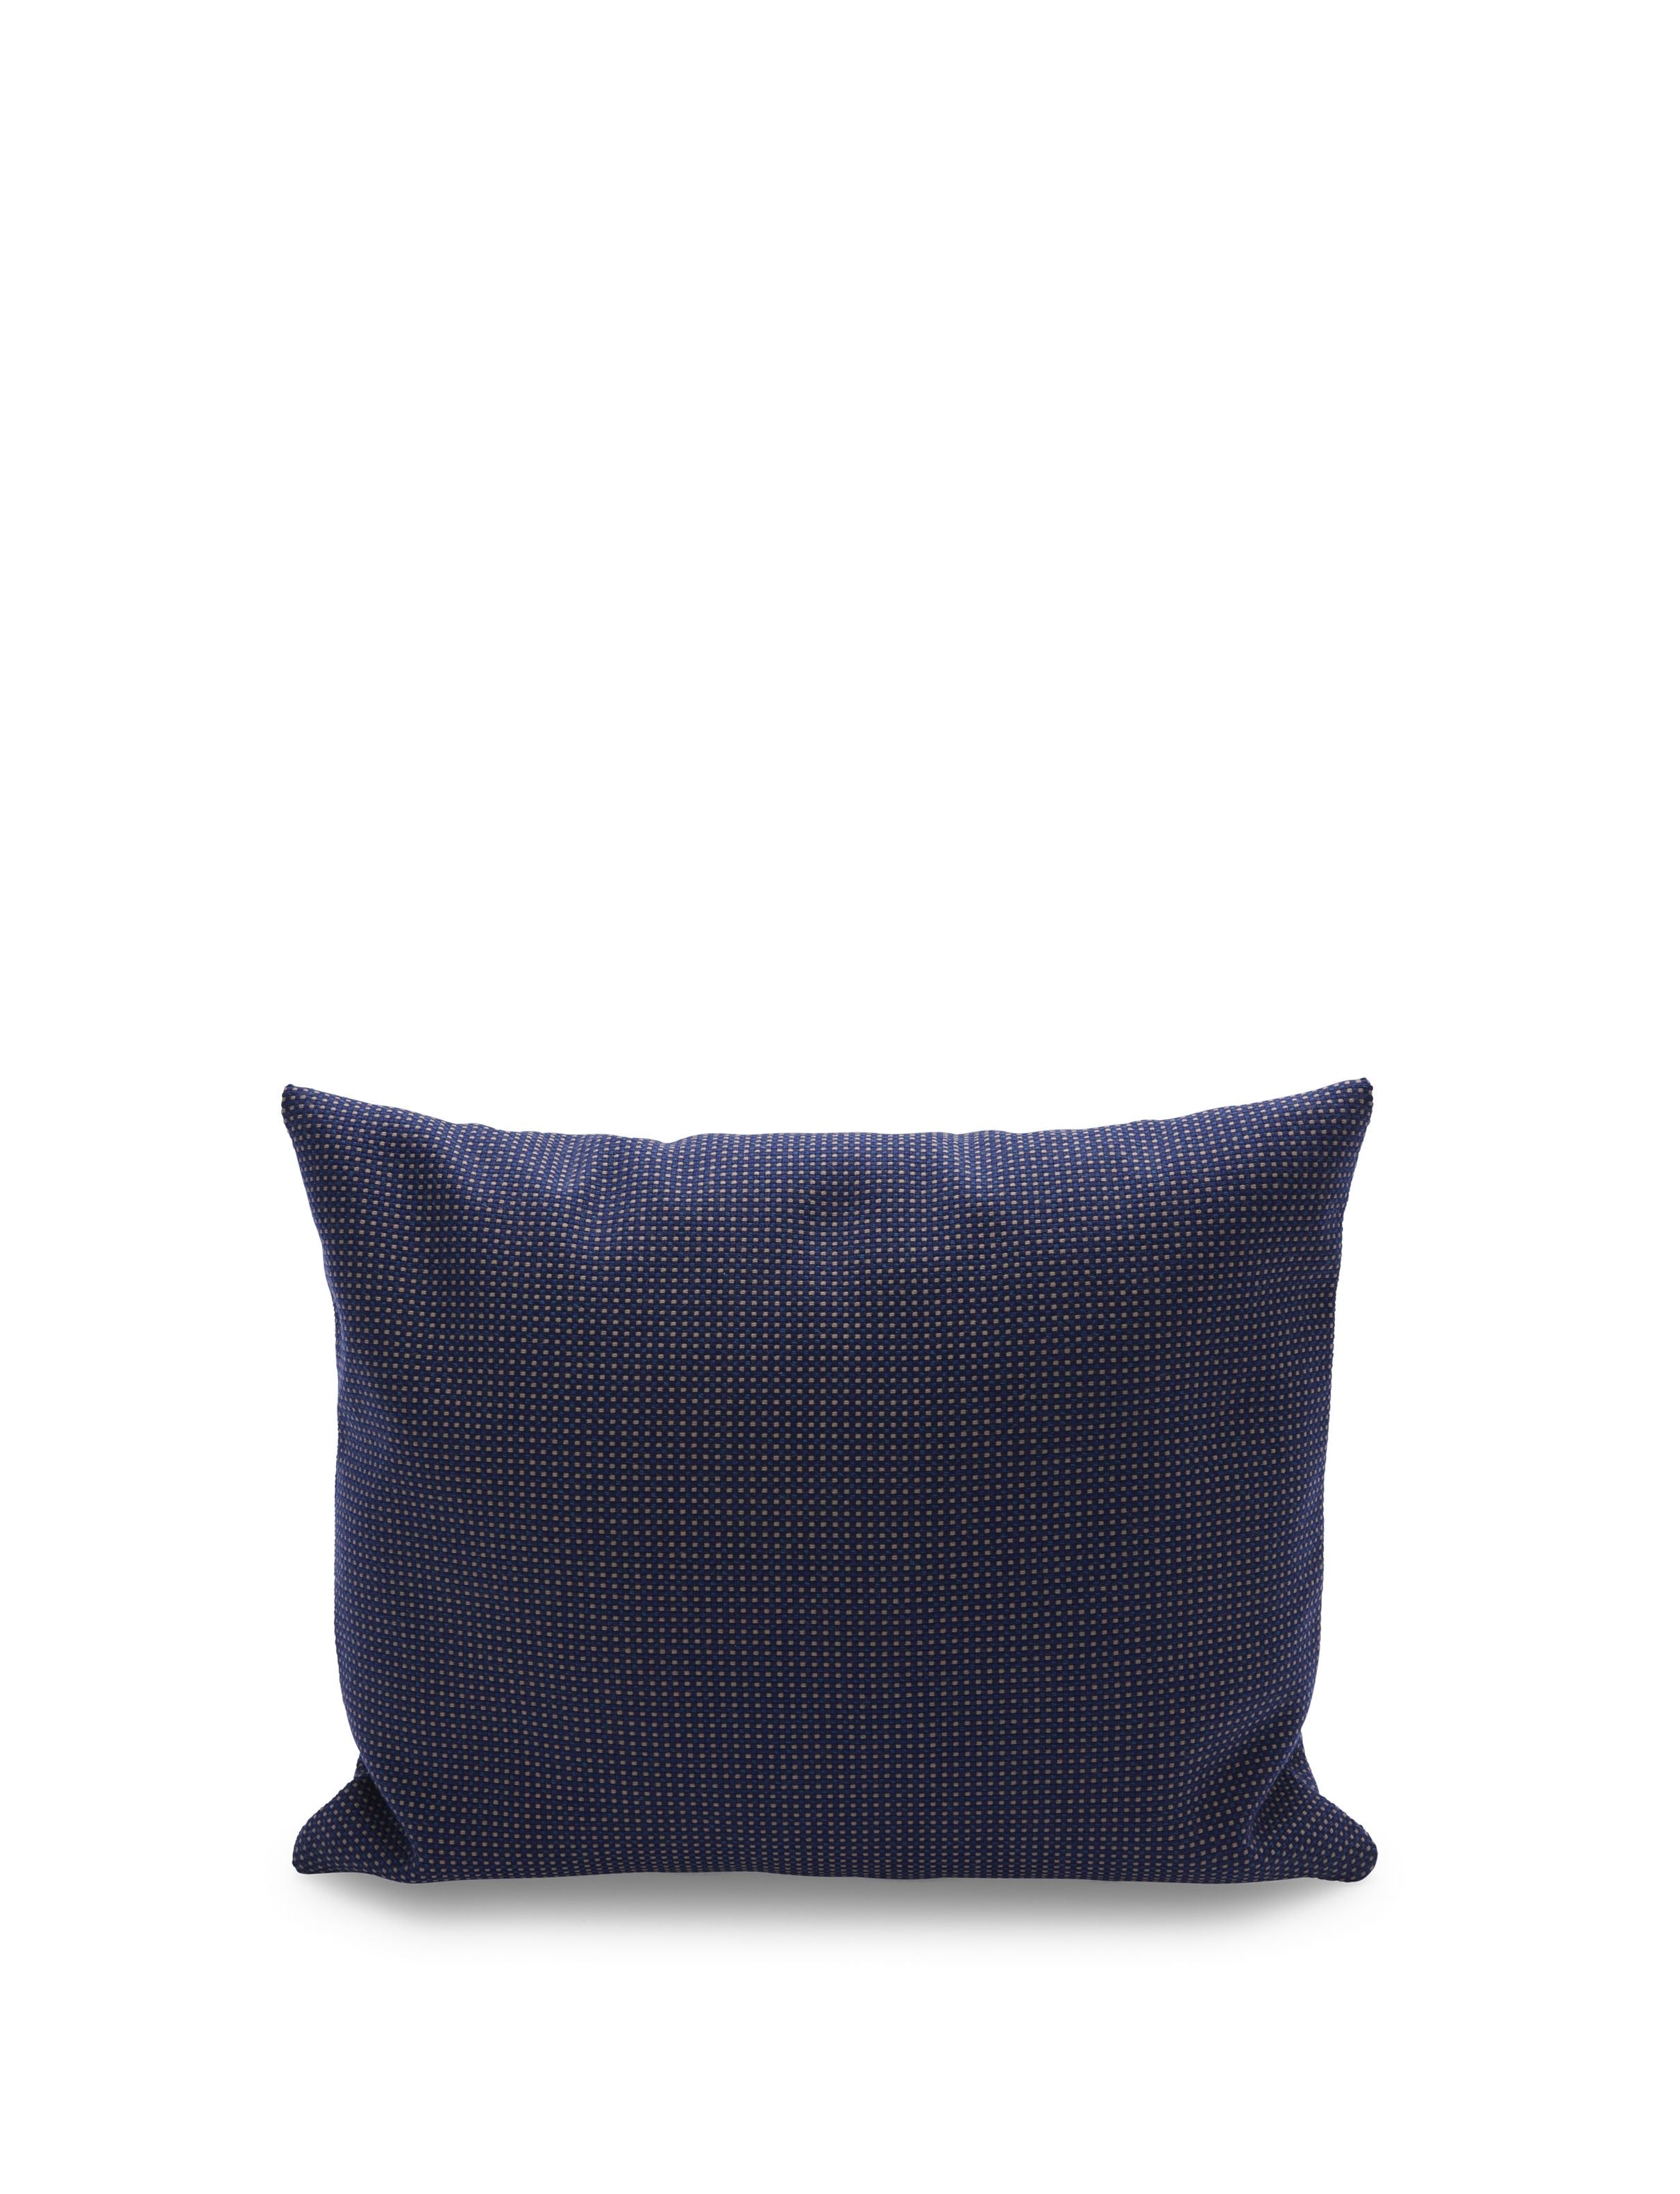 Skagerak Barriere Pillow 50x40 Cm, Dark Blue/Sand Checker